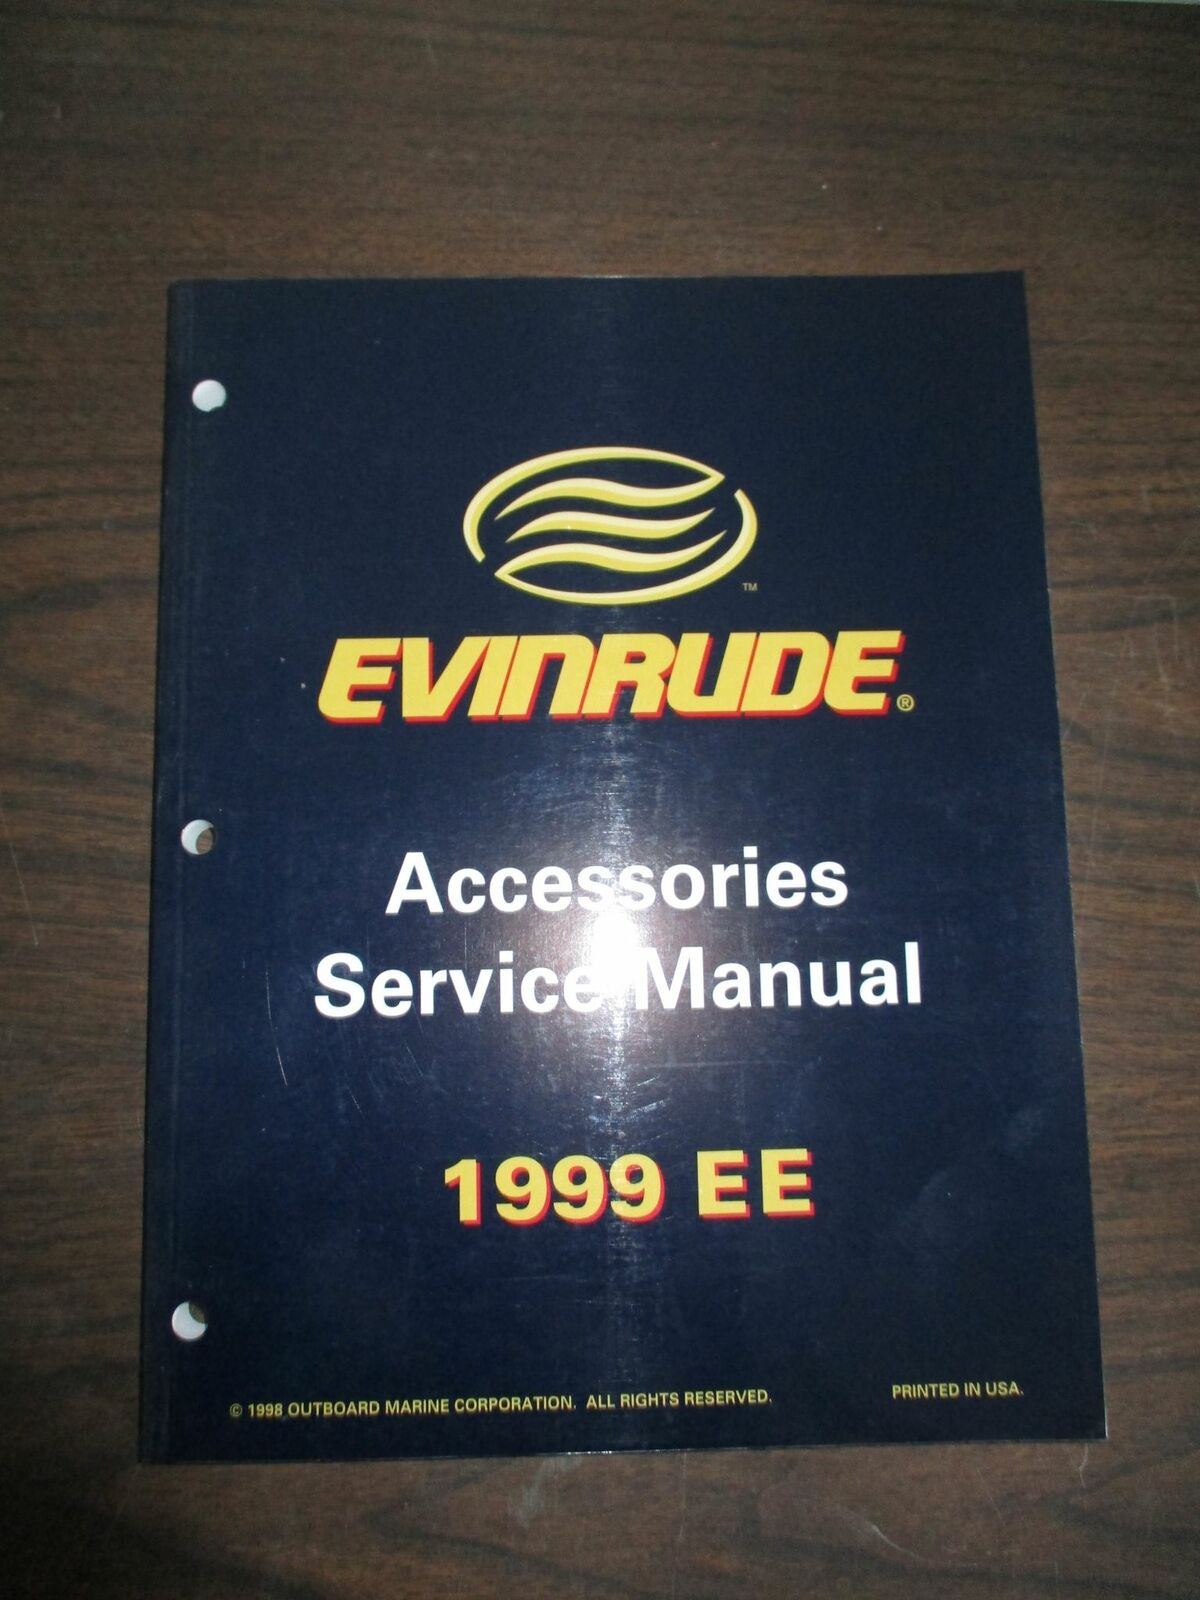 1999 EE Evinrude Accessories Service Manual [P/N: 787026]